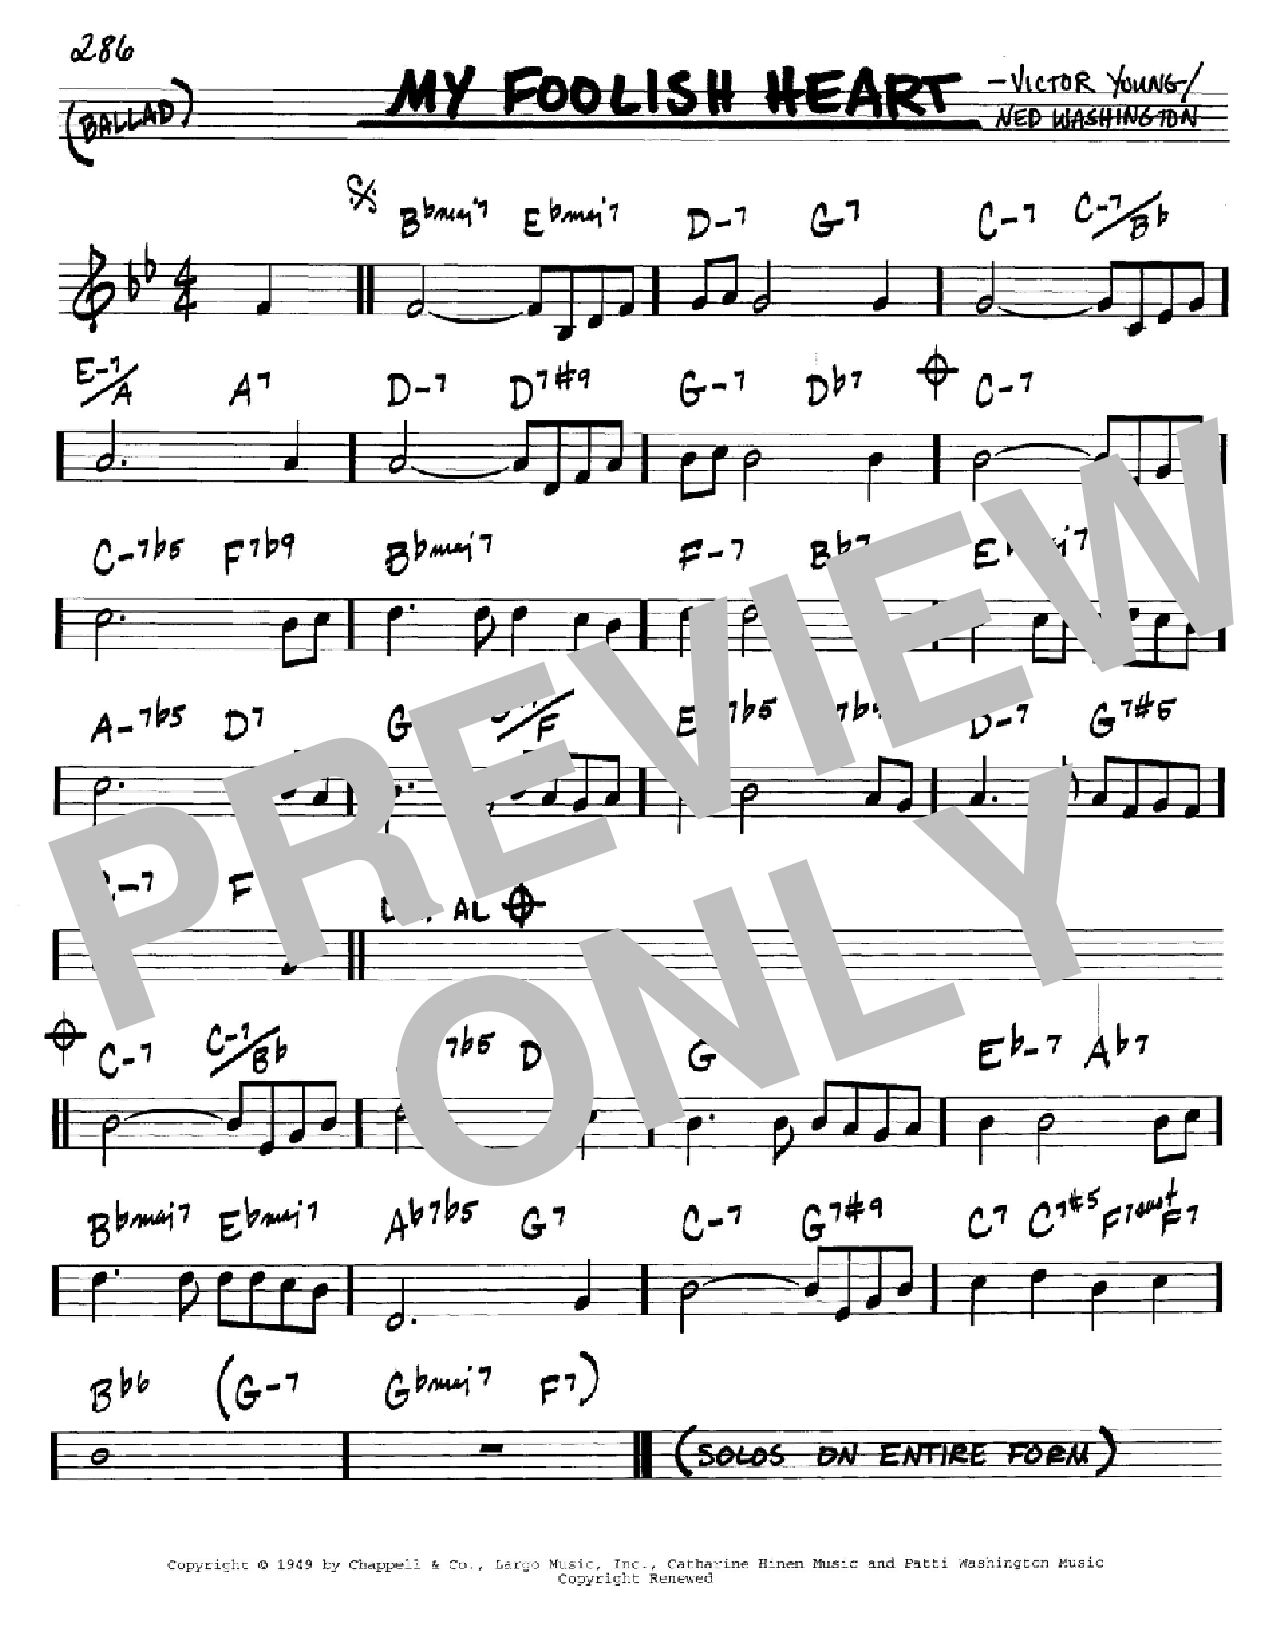 Ned Washington My Foolish Heart Sheet Music Notes & Chords for Melody Line, Lyrics & Chords - Download or Print PDF